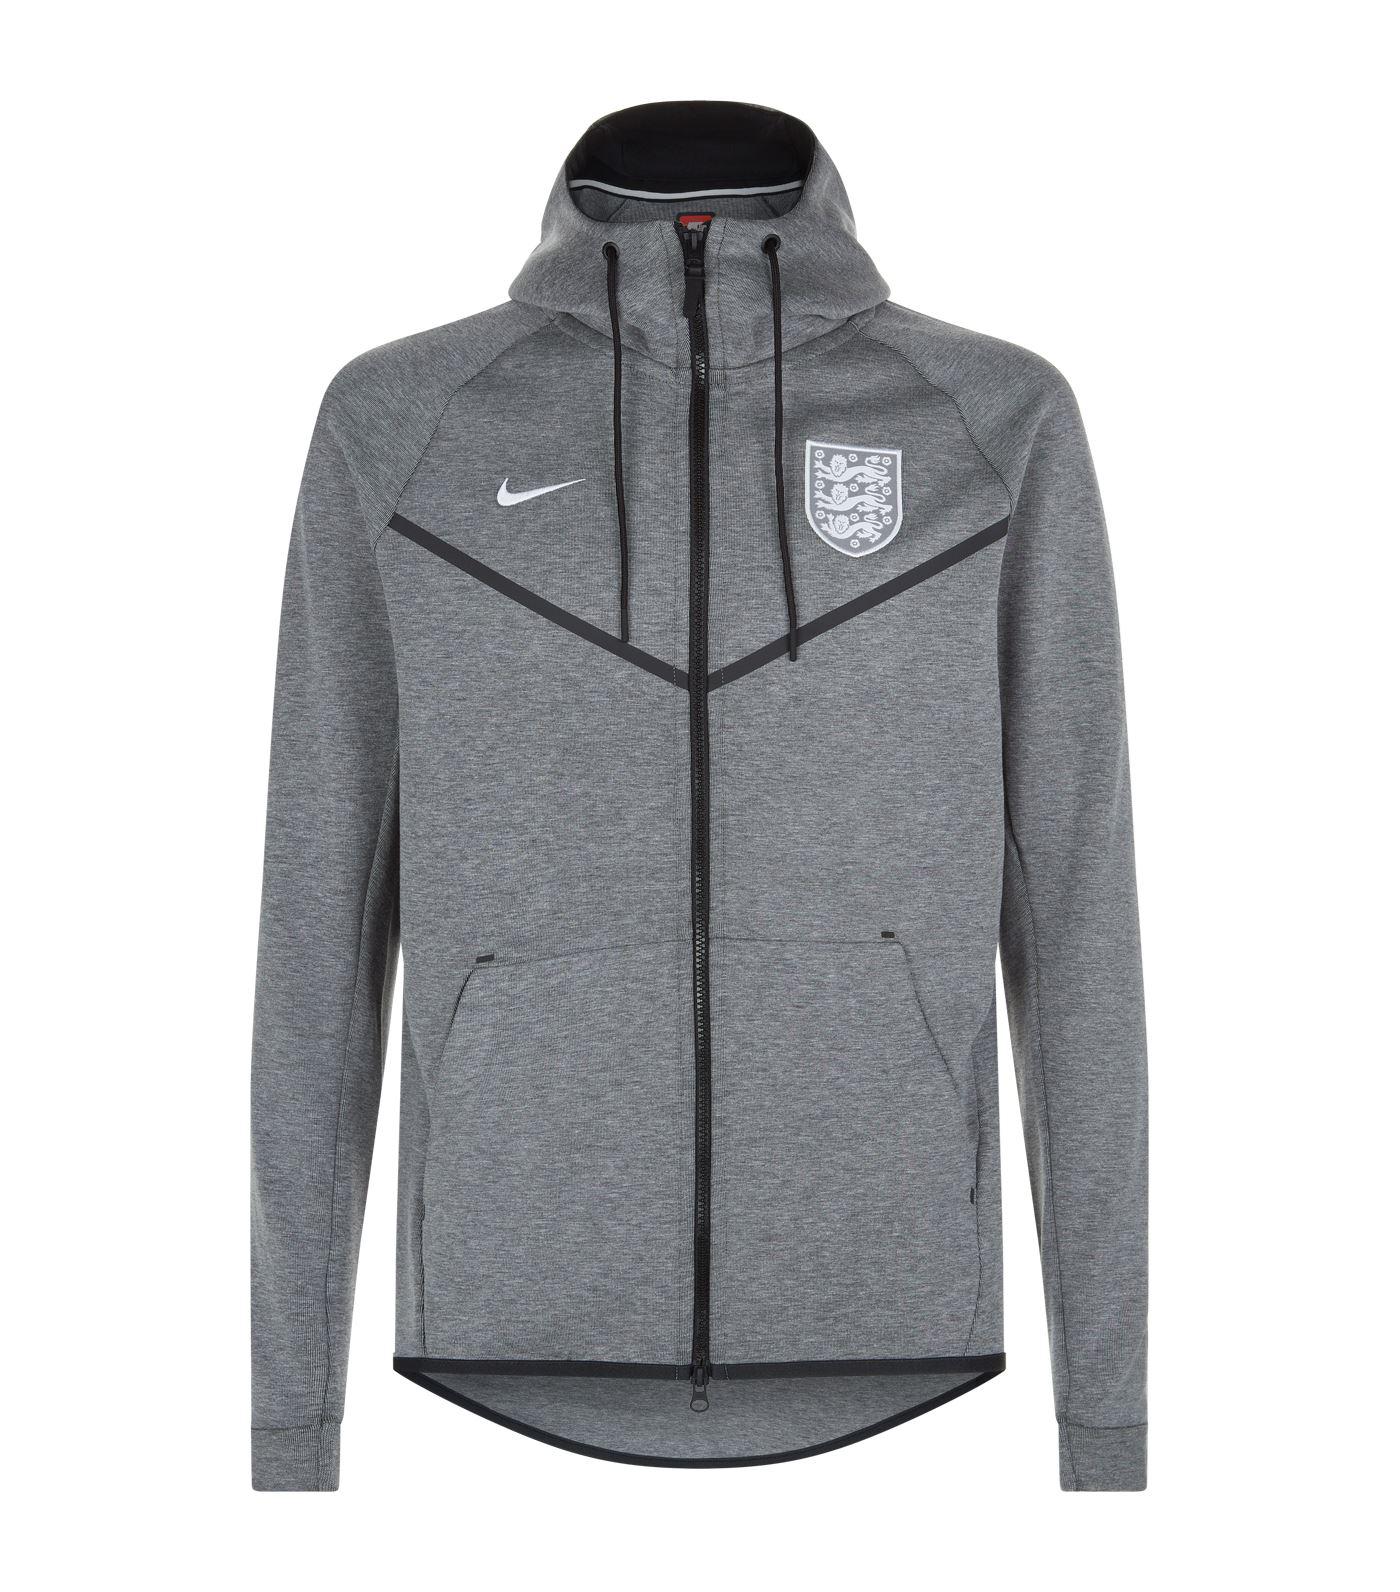 Nike England Tech Fleece Windrunner Jacket in Grey (Grey) for Men - Lyst